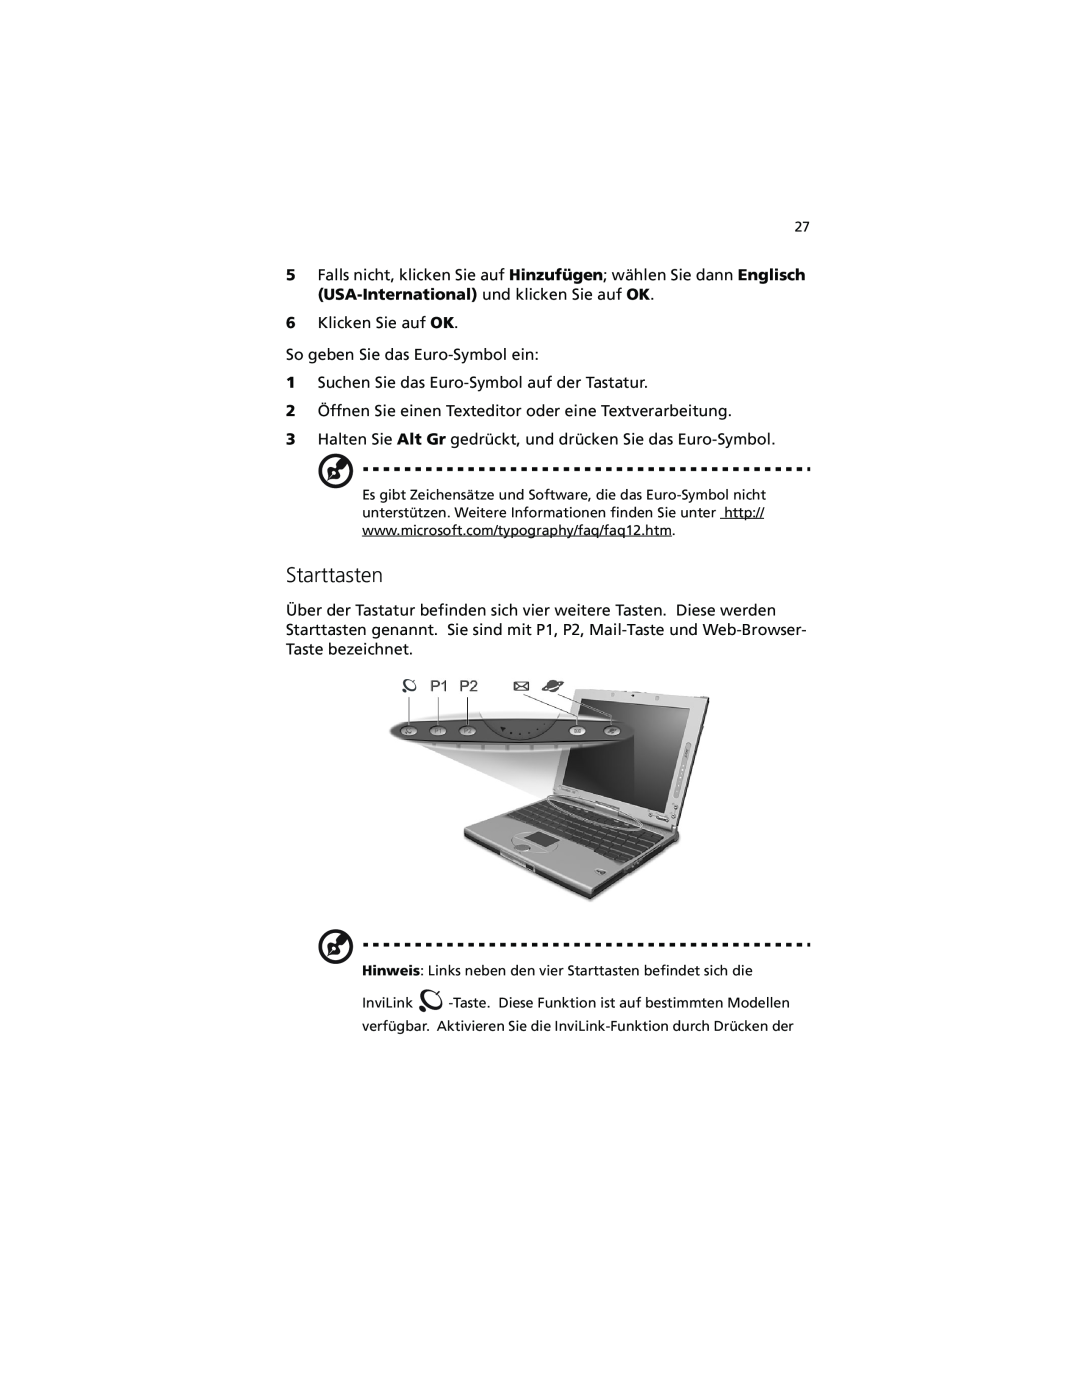 Acer C100-Series manual Starttasten 